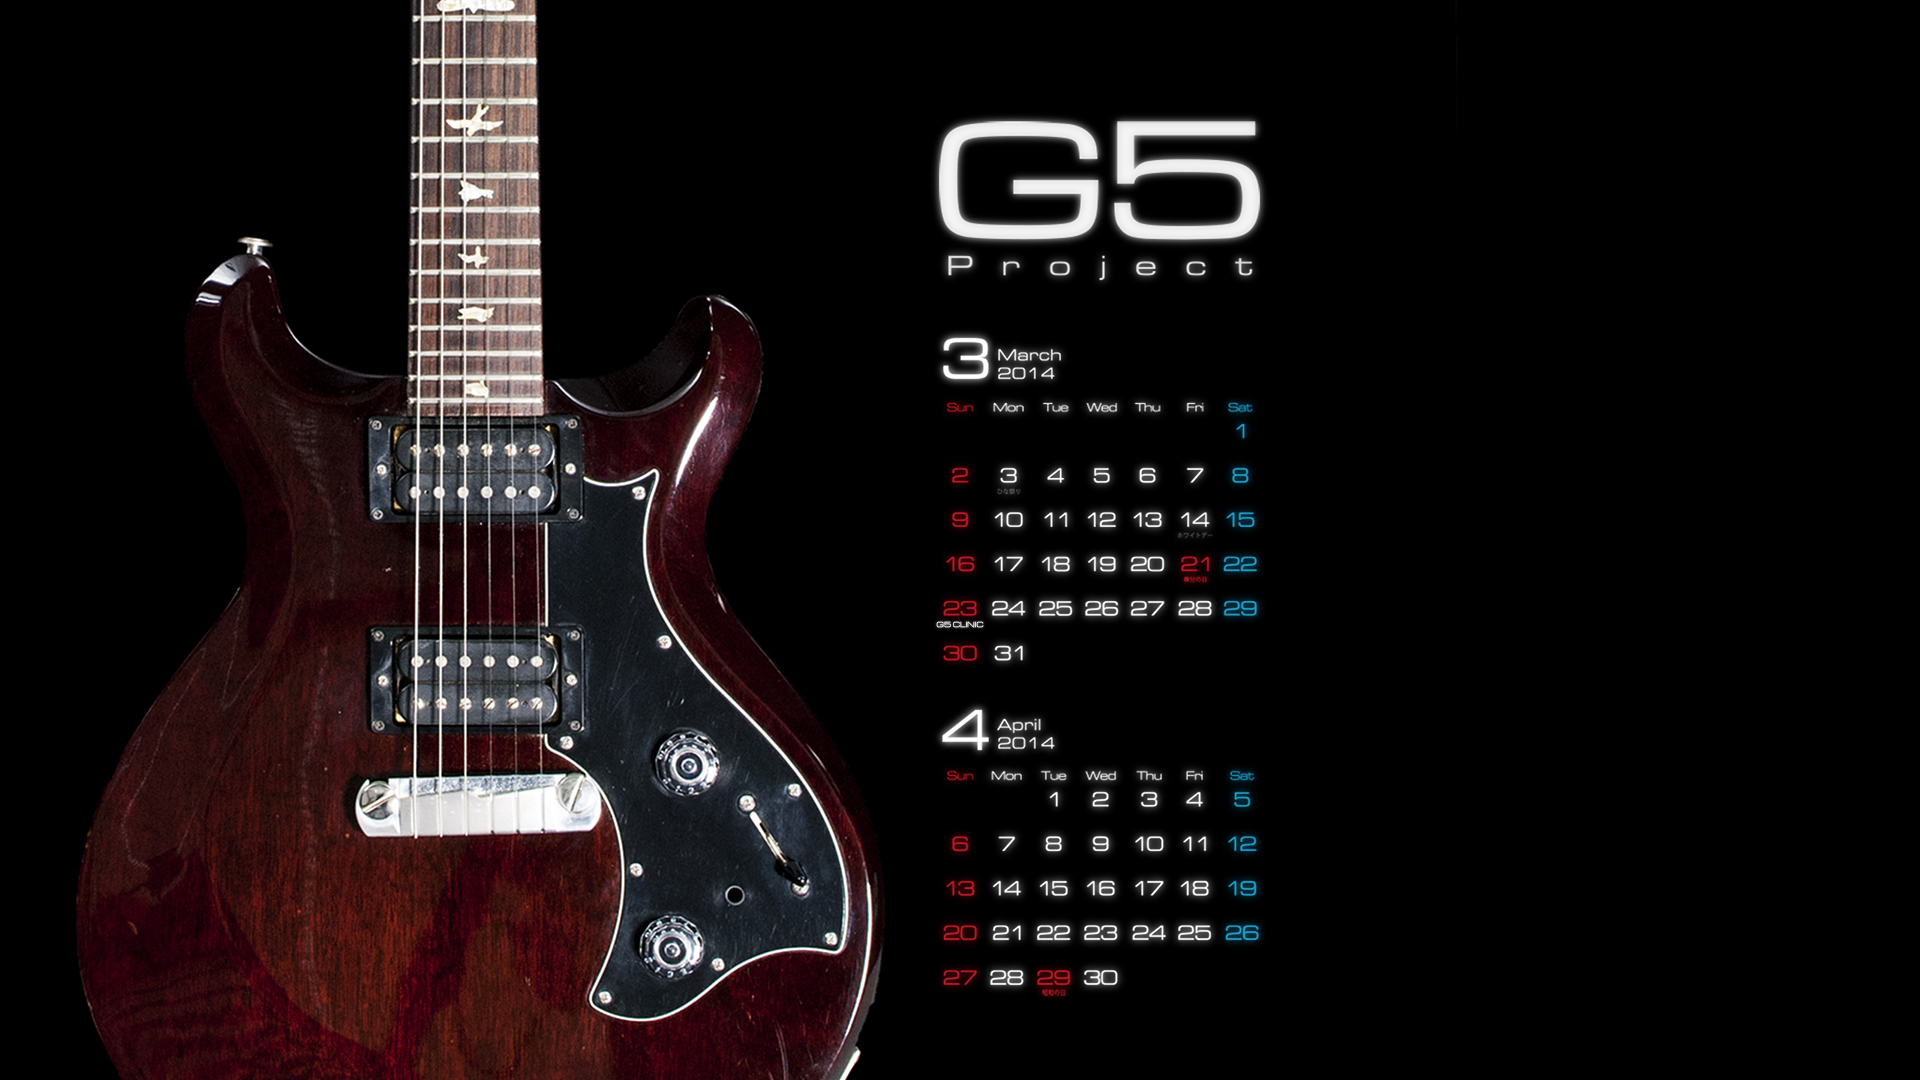 G5 2014 calendar wallpaper更新